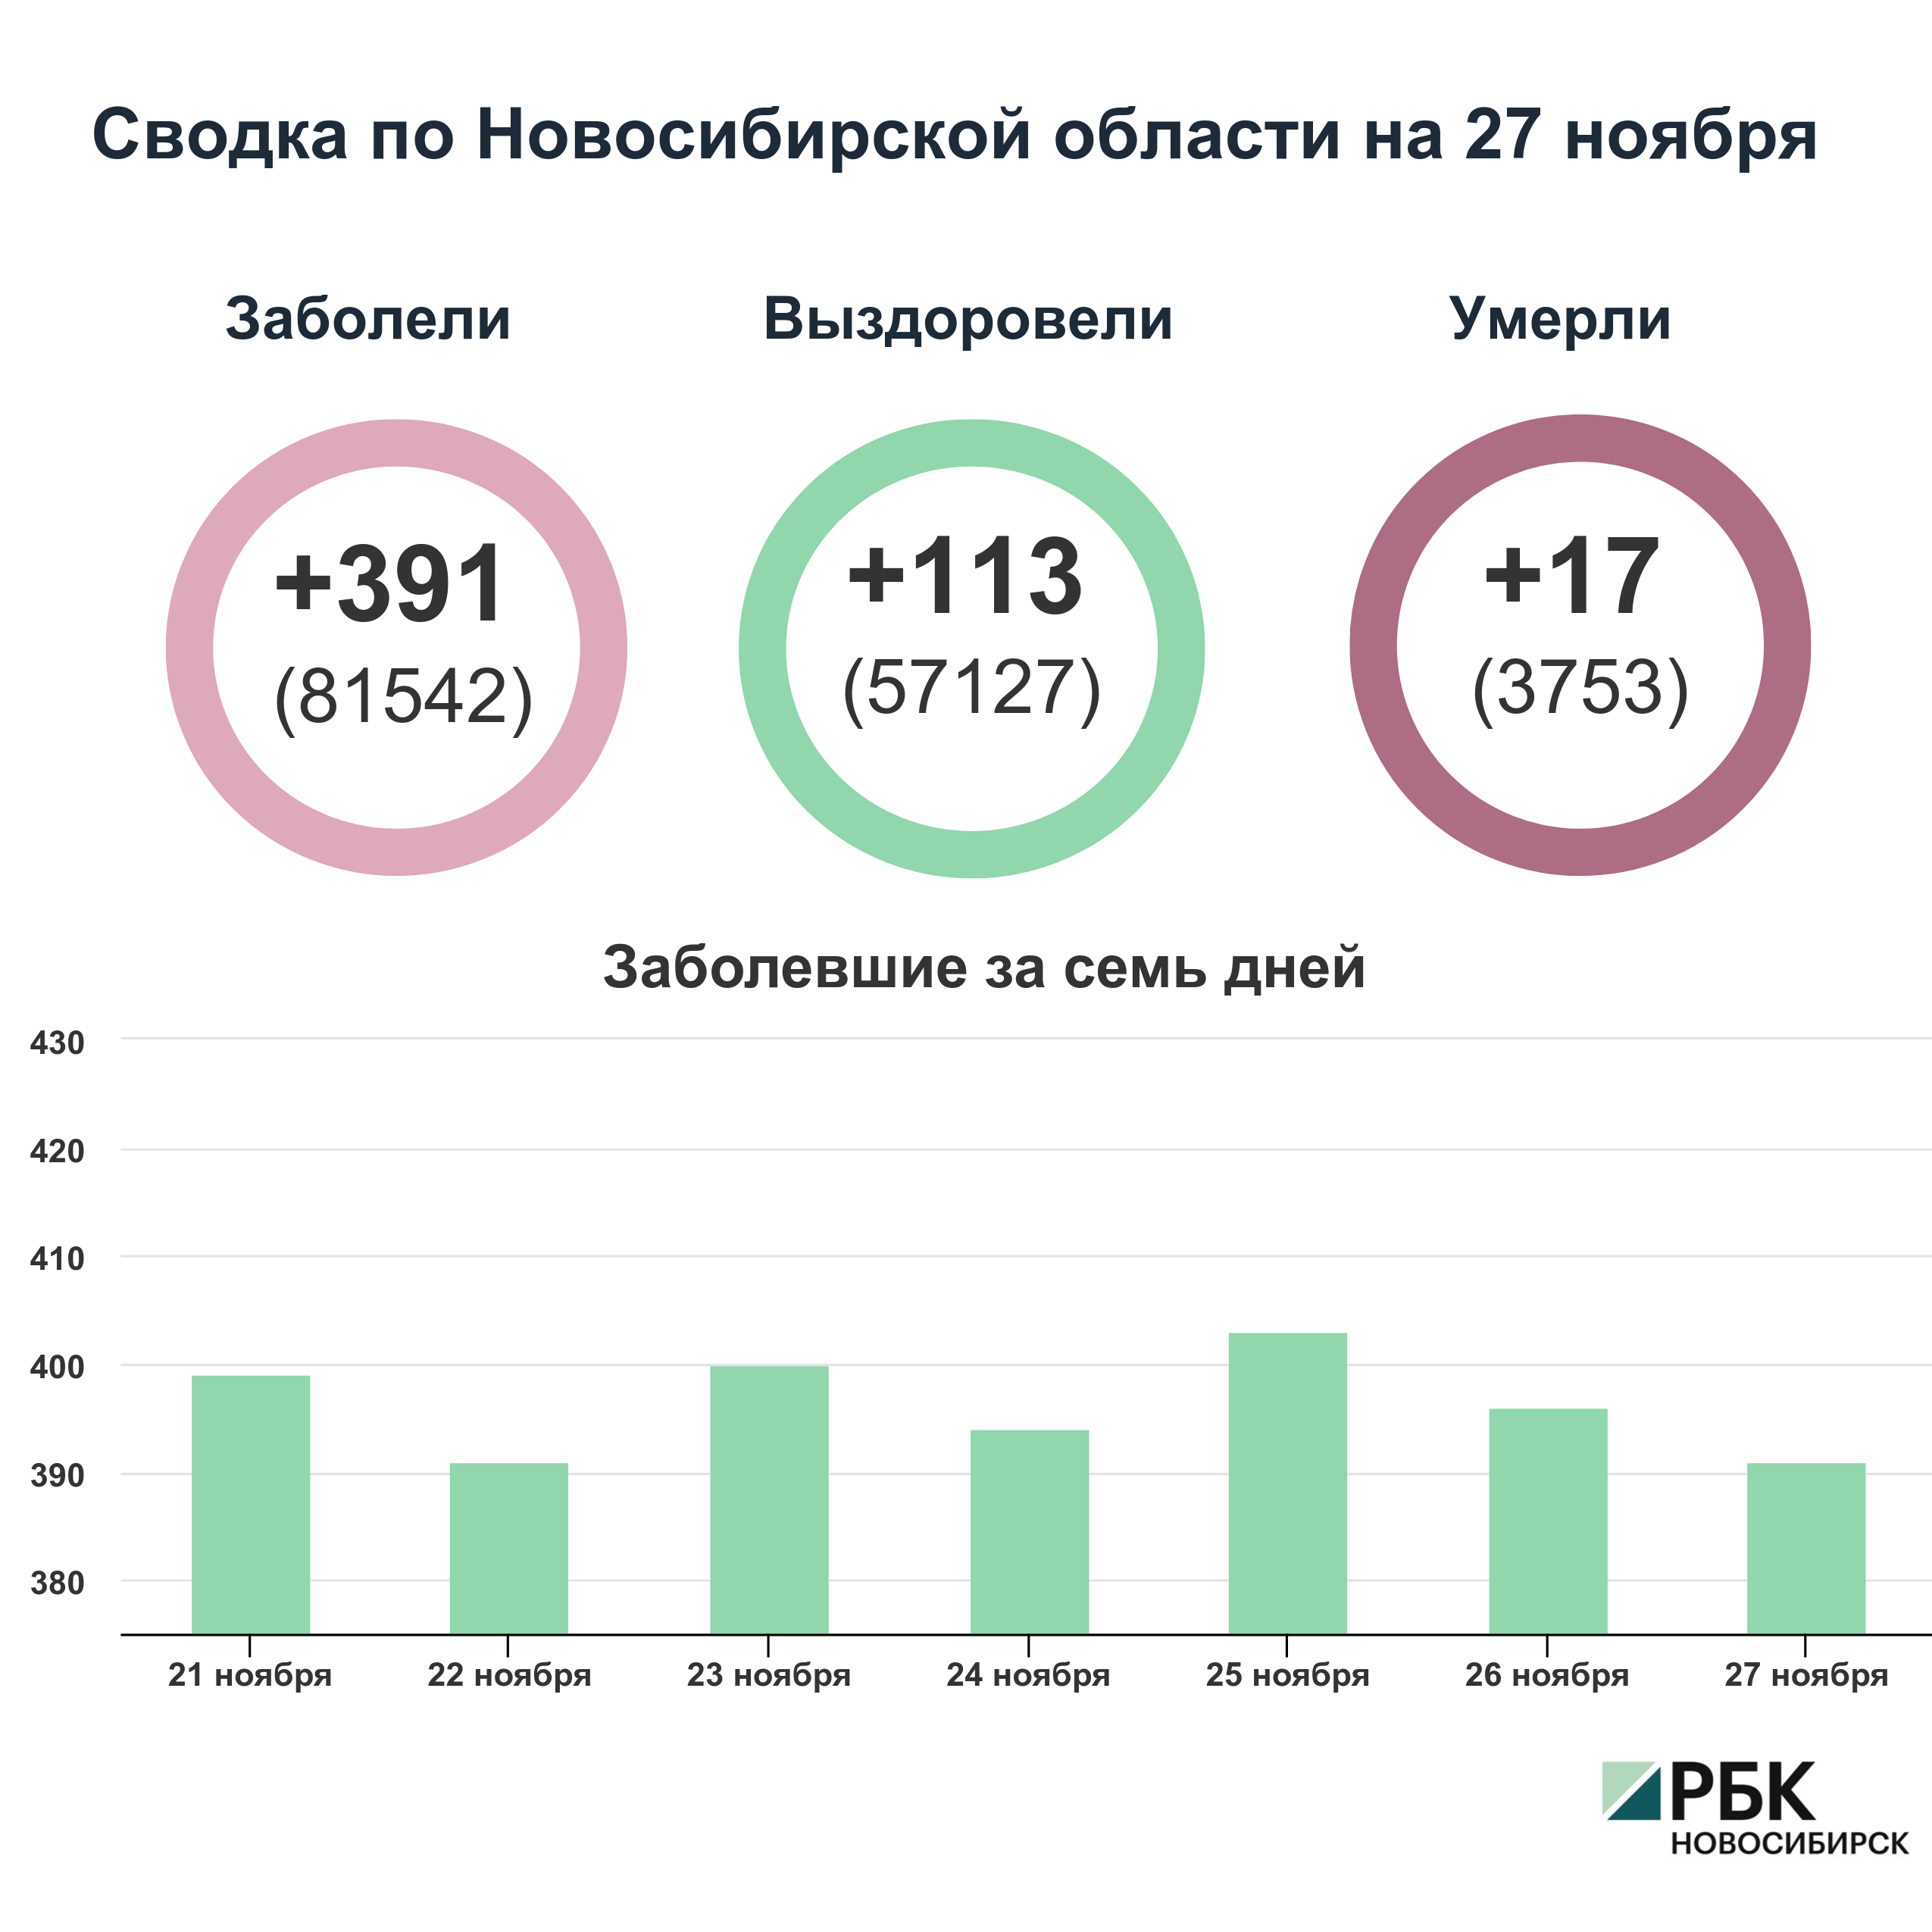 Коронавирус в Новосибирске: сводка на 27 ноября